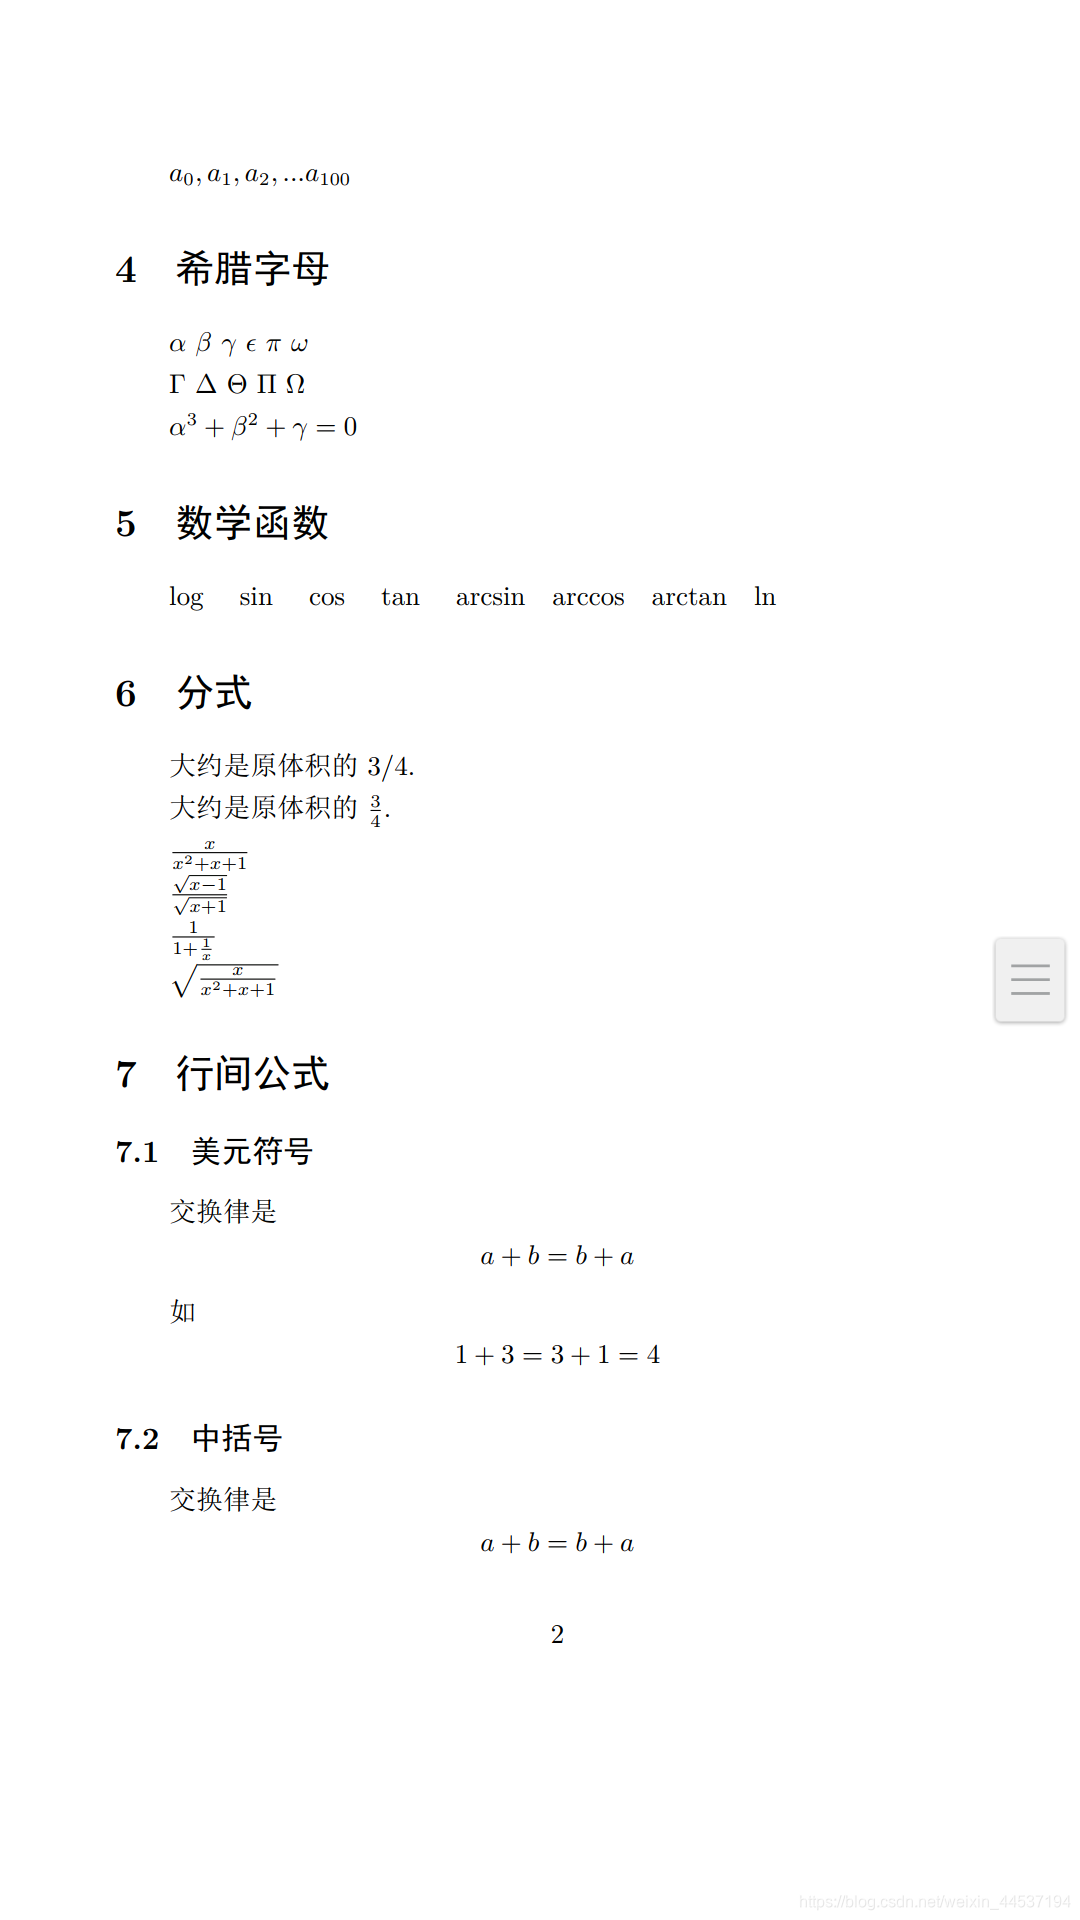 第九节 Latex中数学公式的编排 Guo Ping Blog 程序员its404 Latex数学公式排版 程序员its404